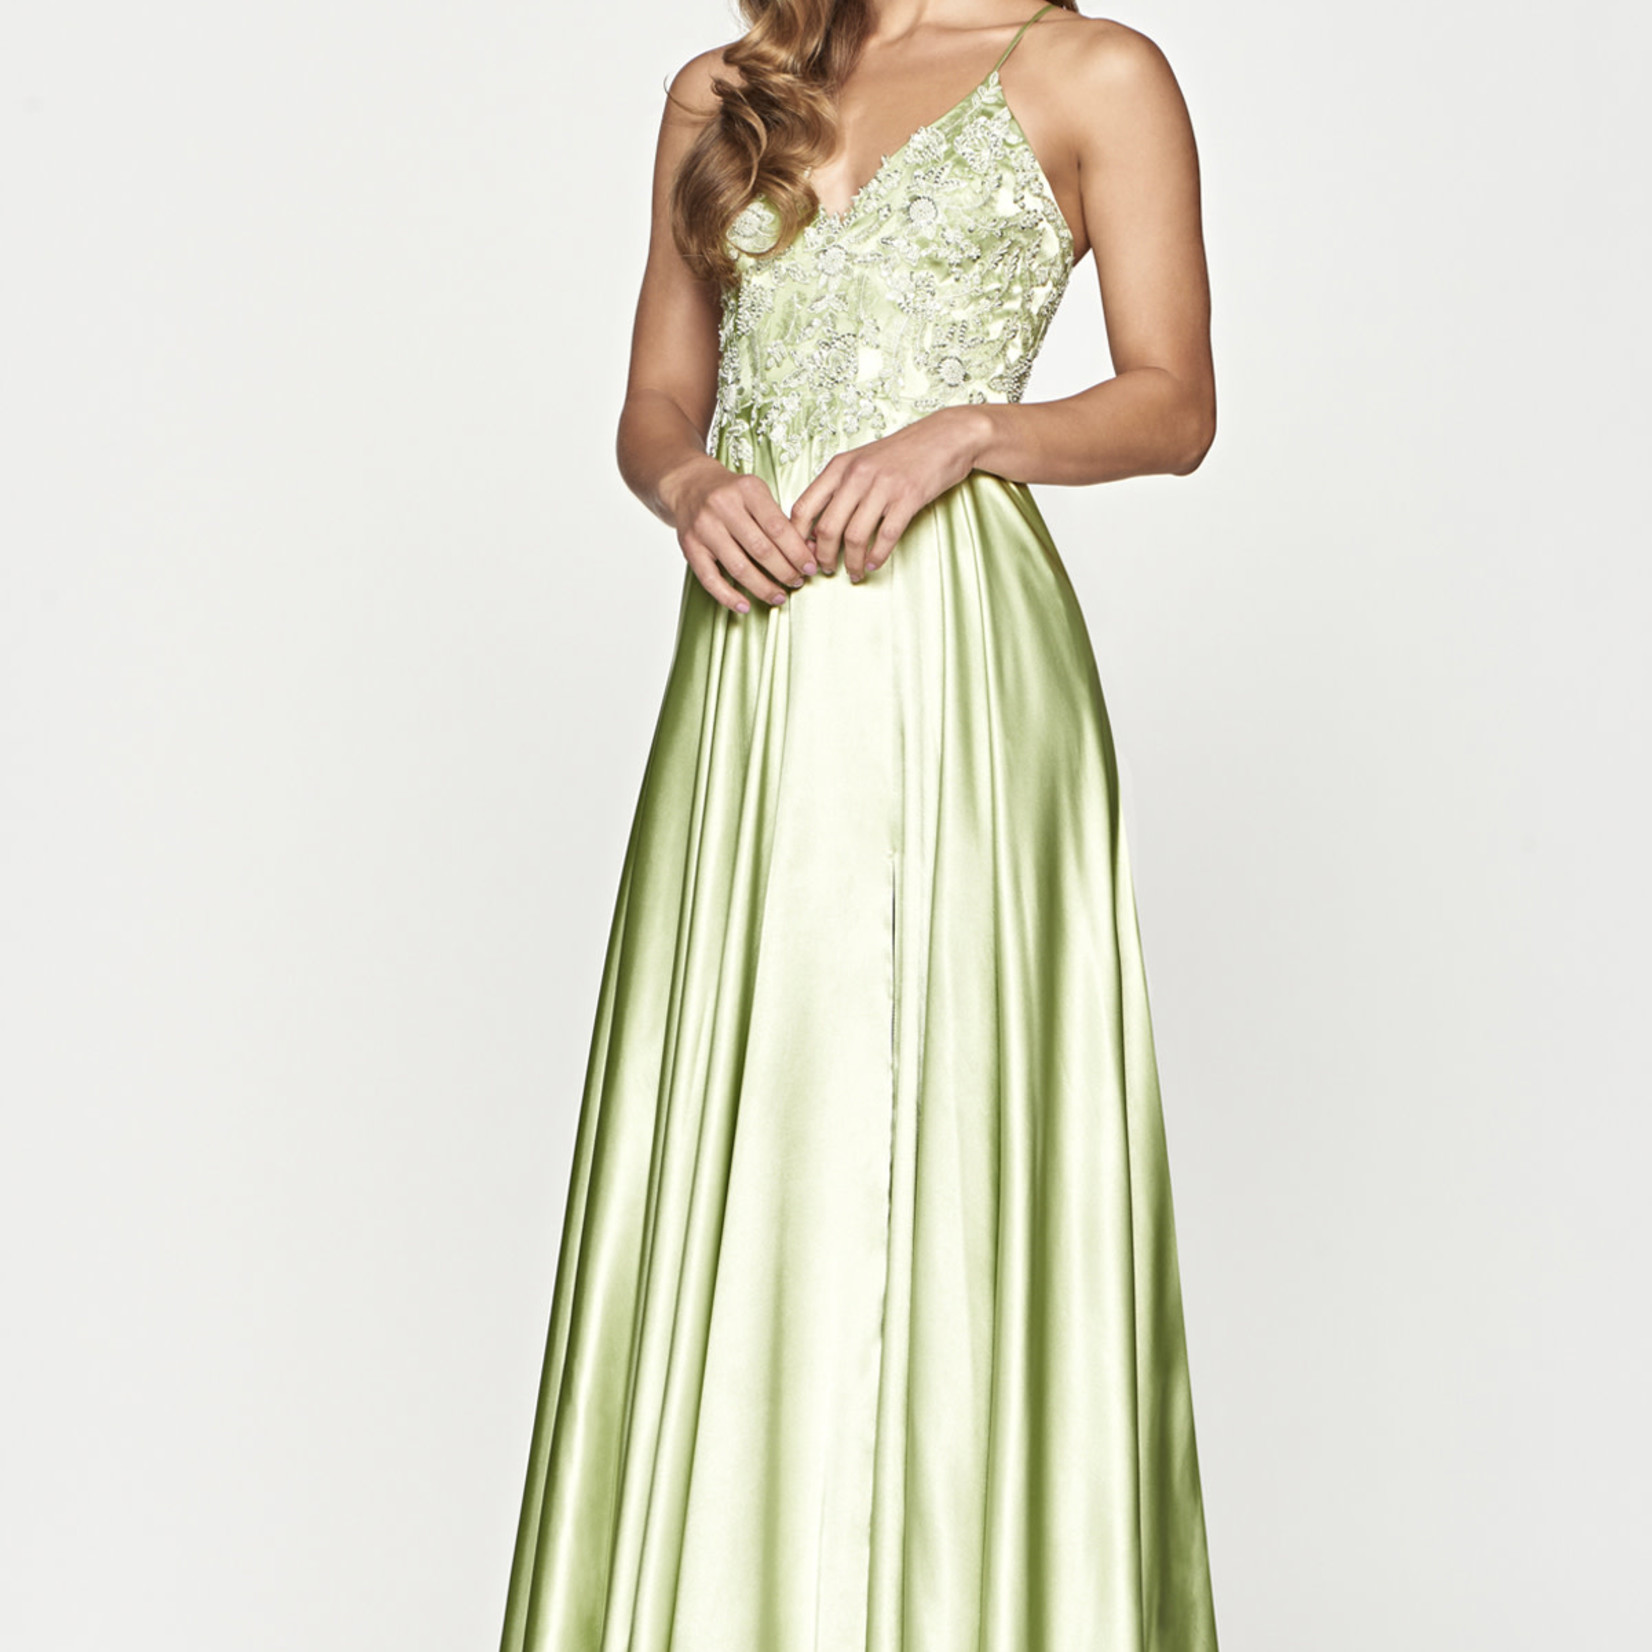 Faviana Faviana S10670 Beaded Bodice A-Line Gown